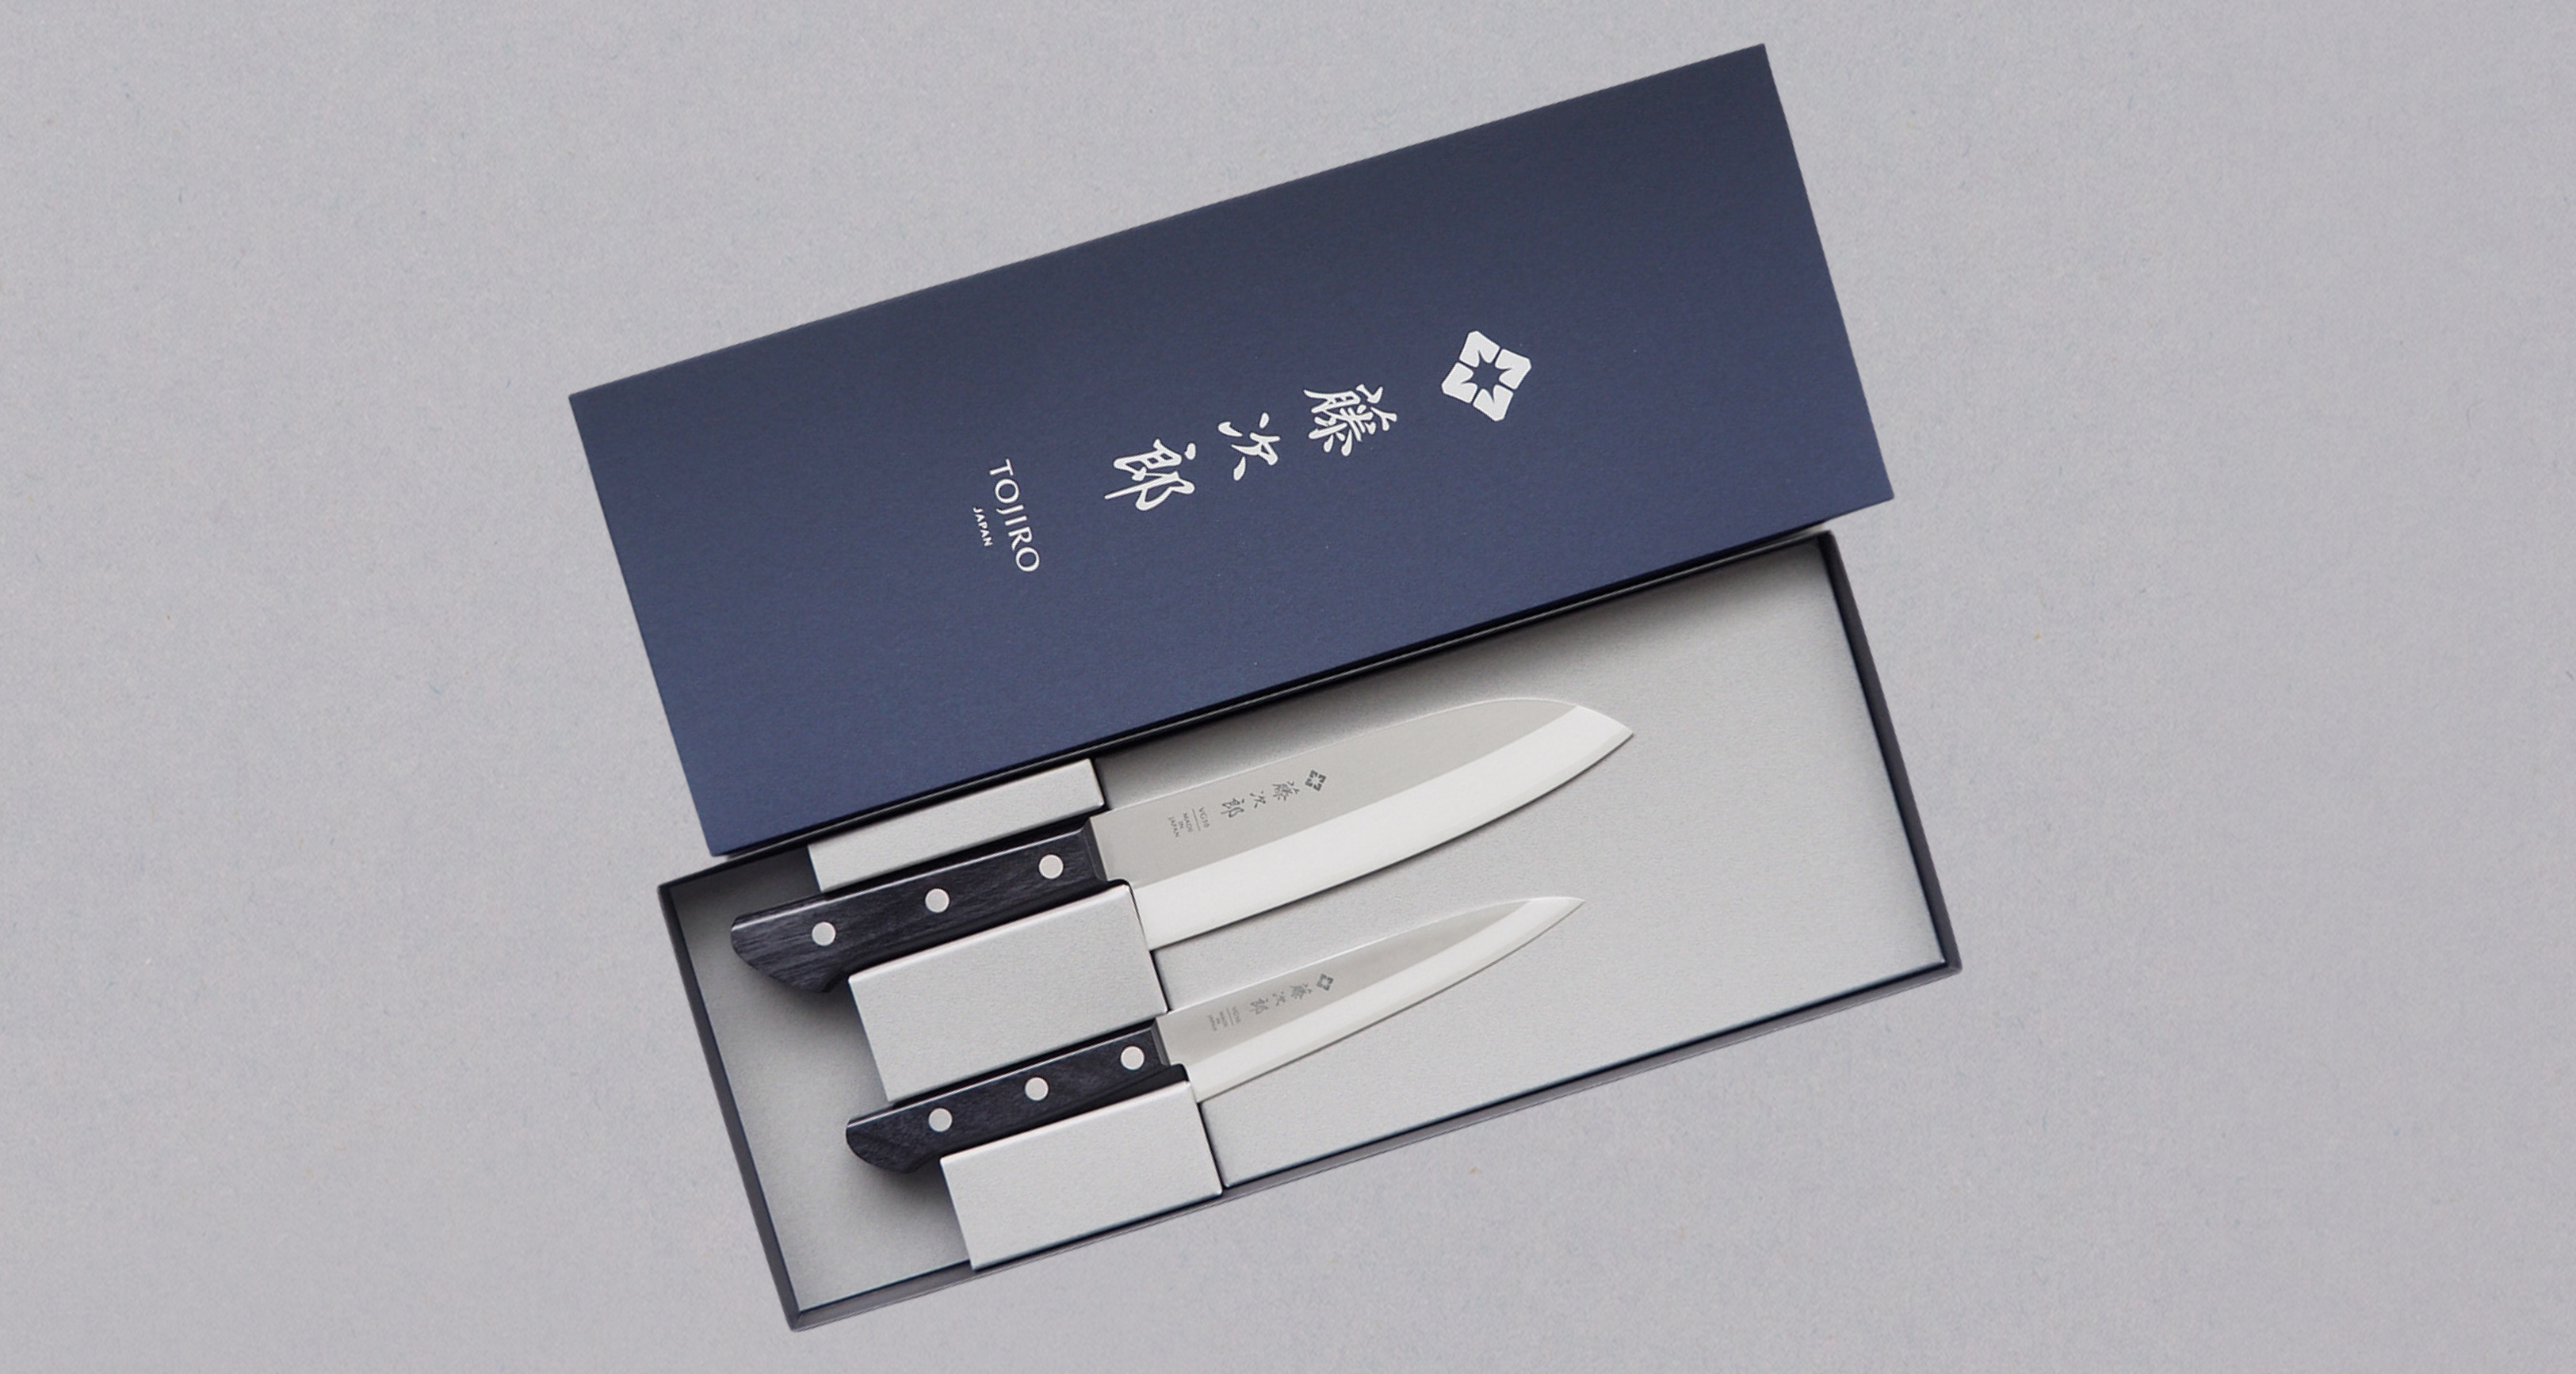 Tojiro Child Santoku: One Adults' New Favourite Knife